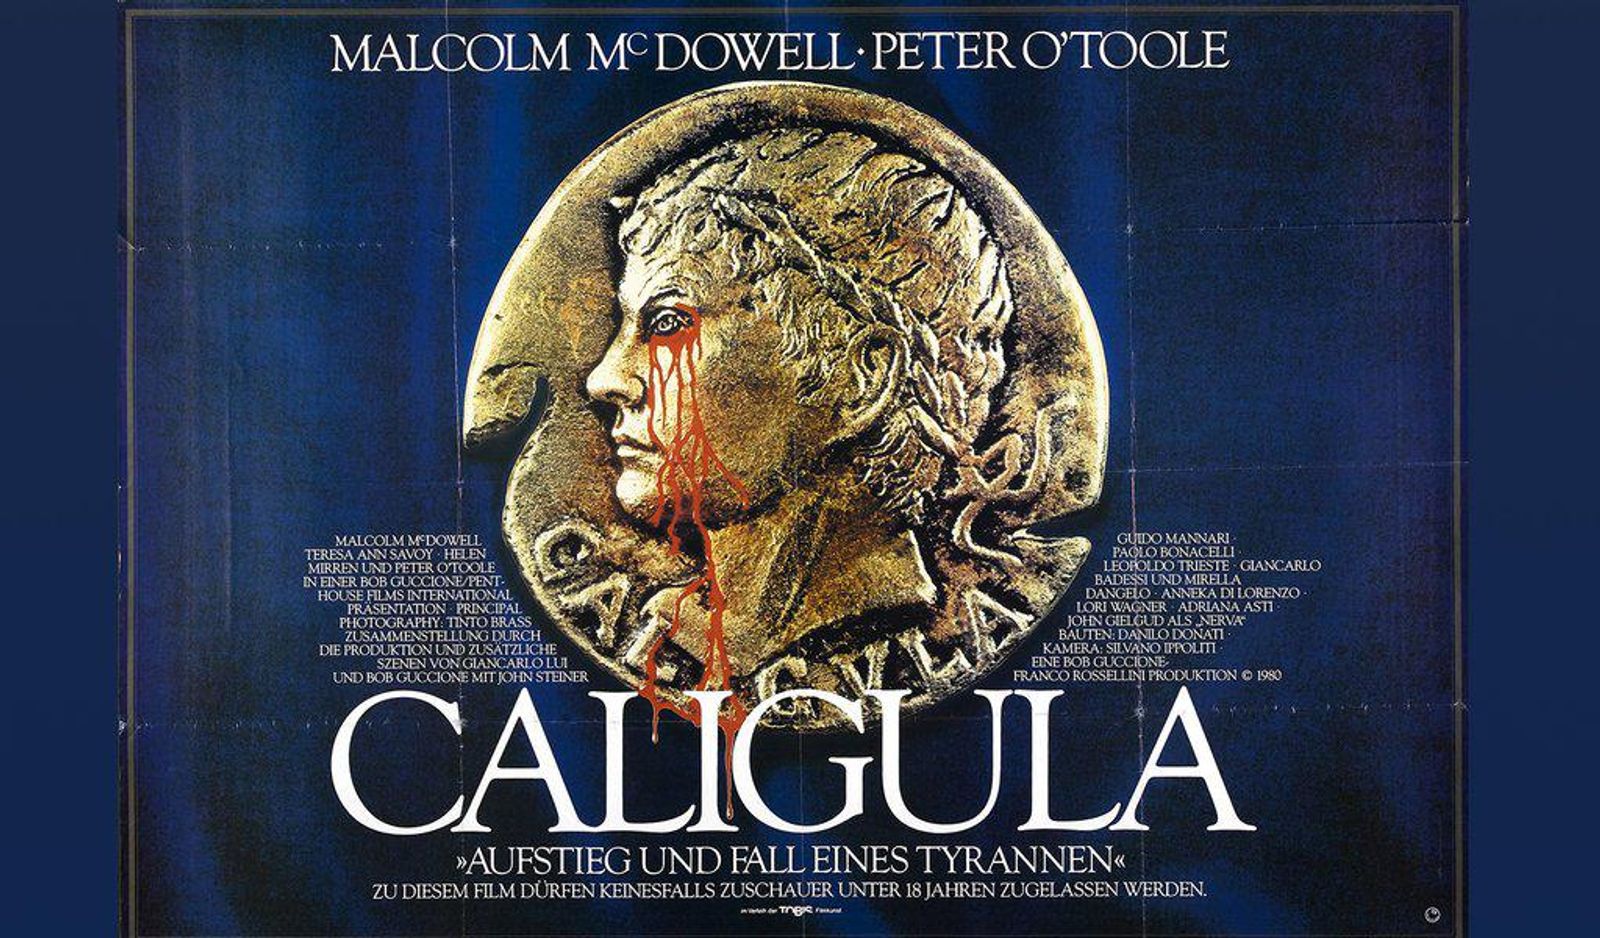 'Caligula' Exhibition of On-Set Photos Coming to LA Art Show